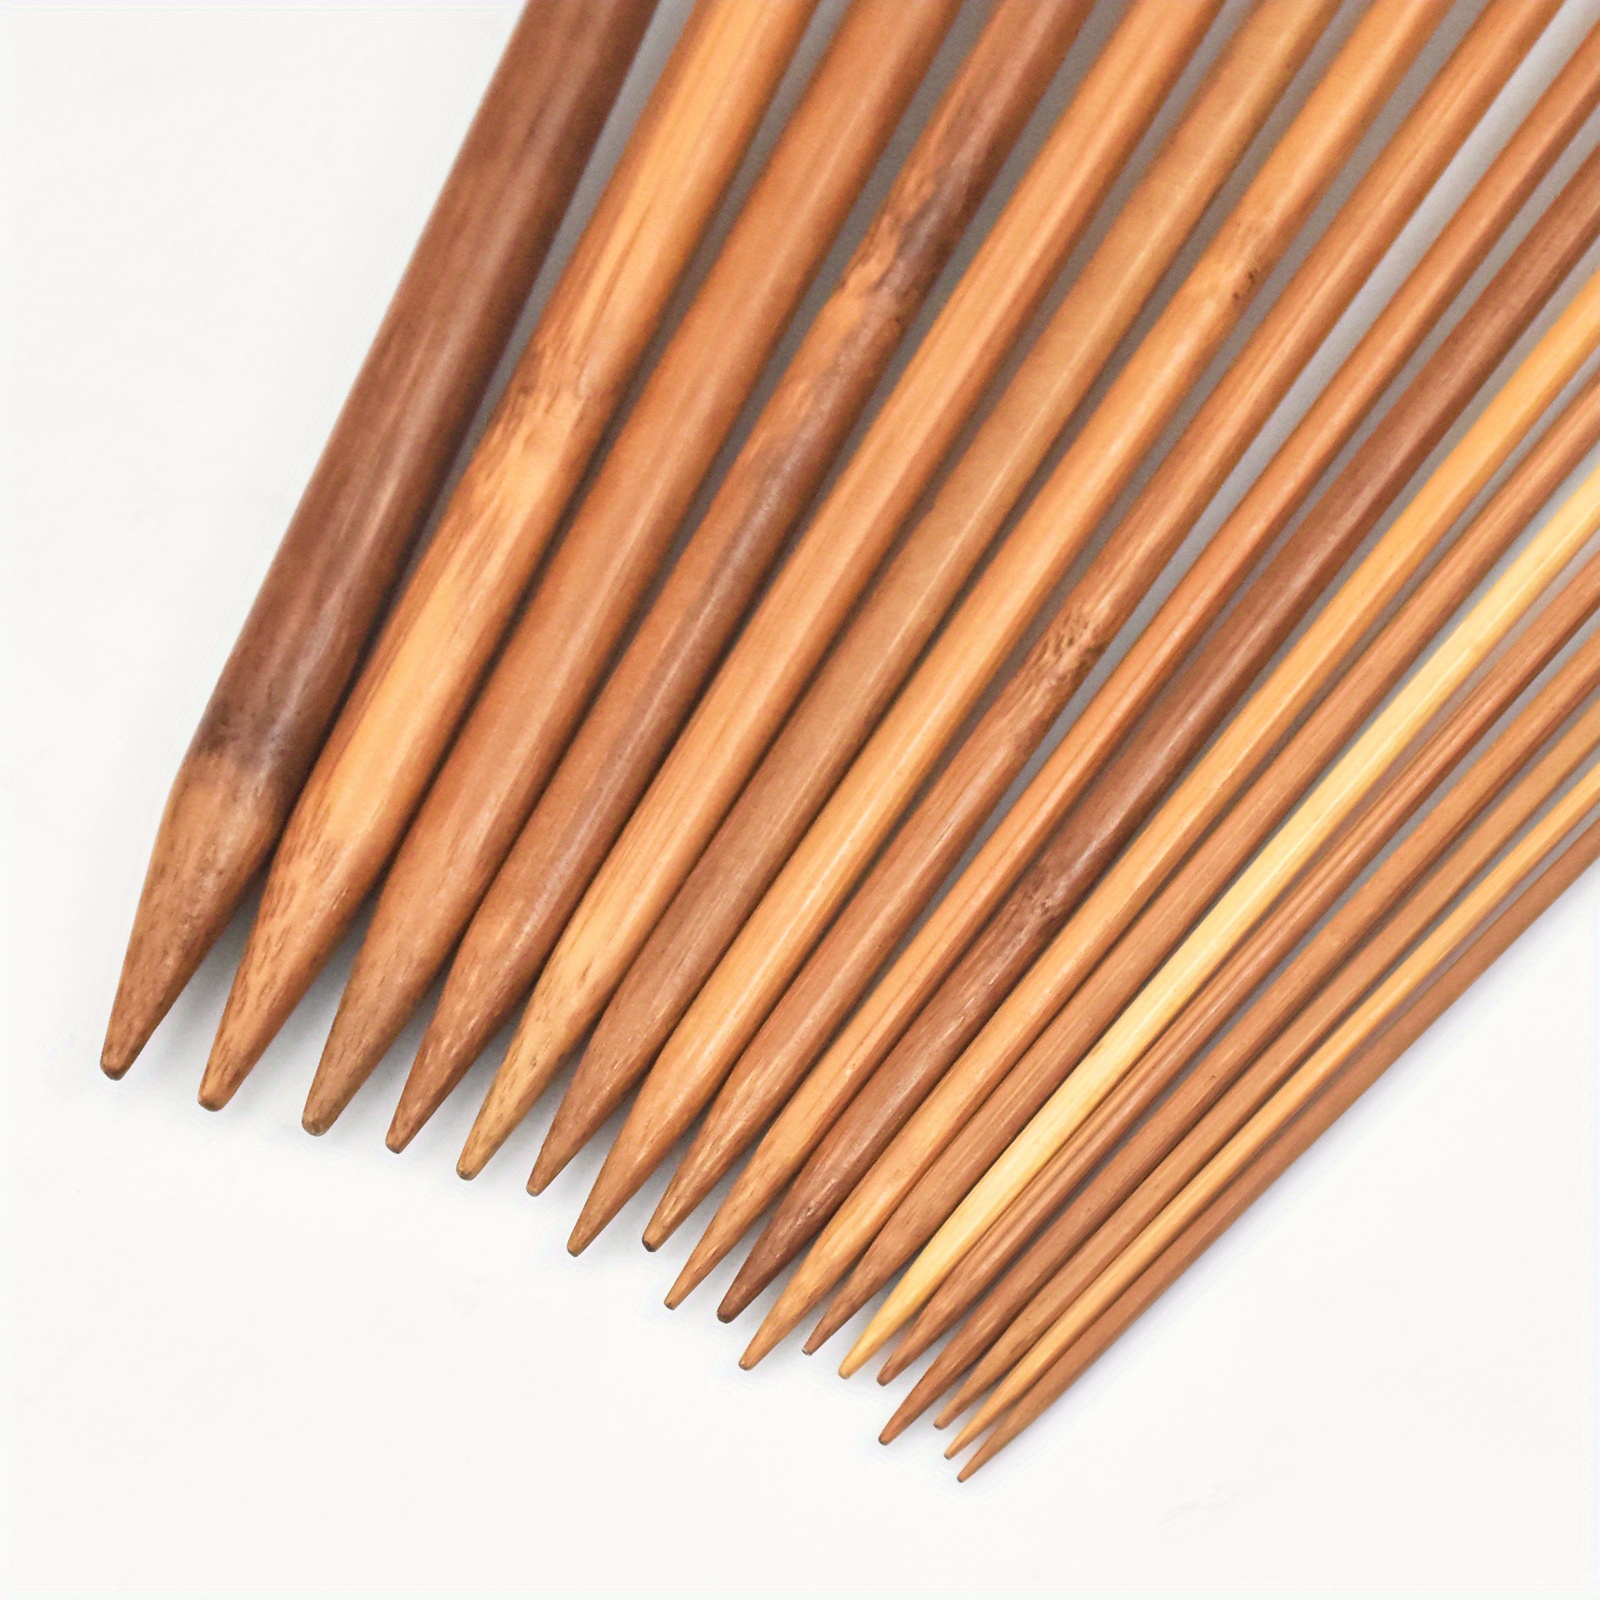 36PCS Bamboo Knitting Needles Set, BetyBedy Single Pointed